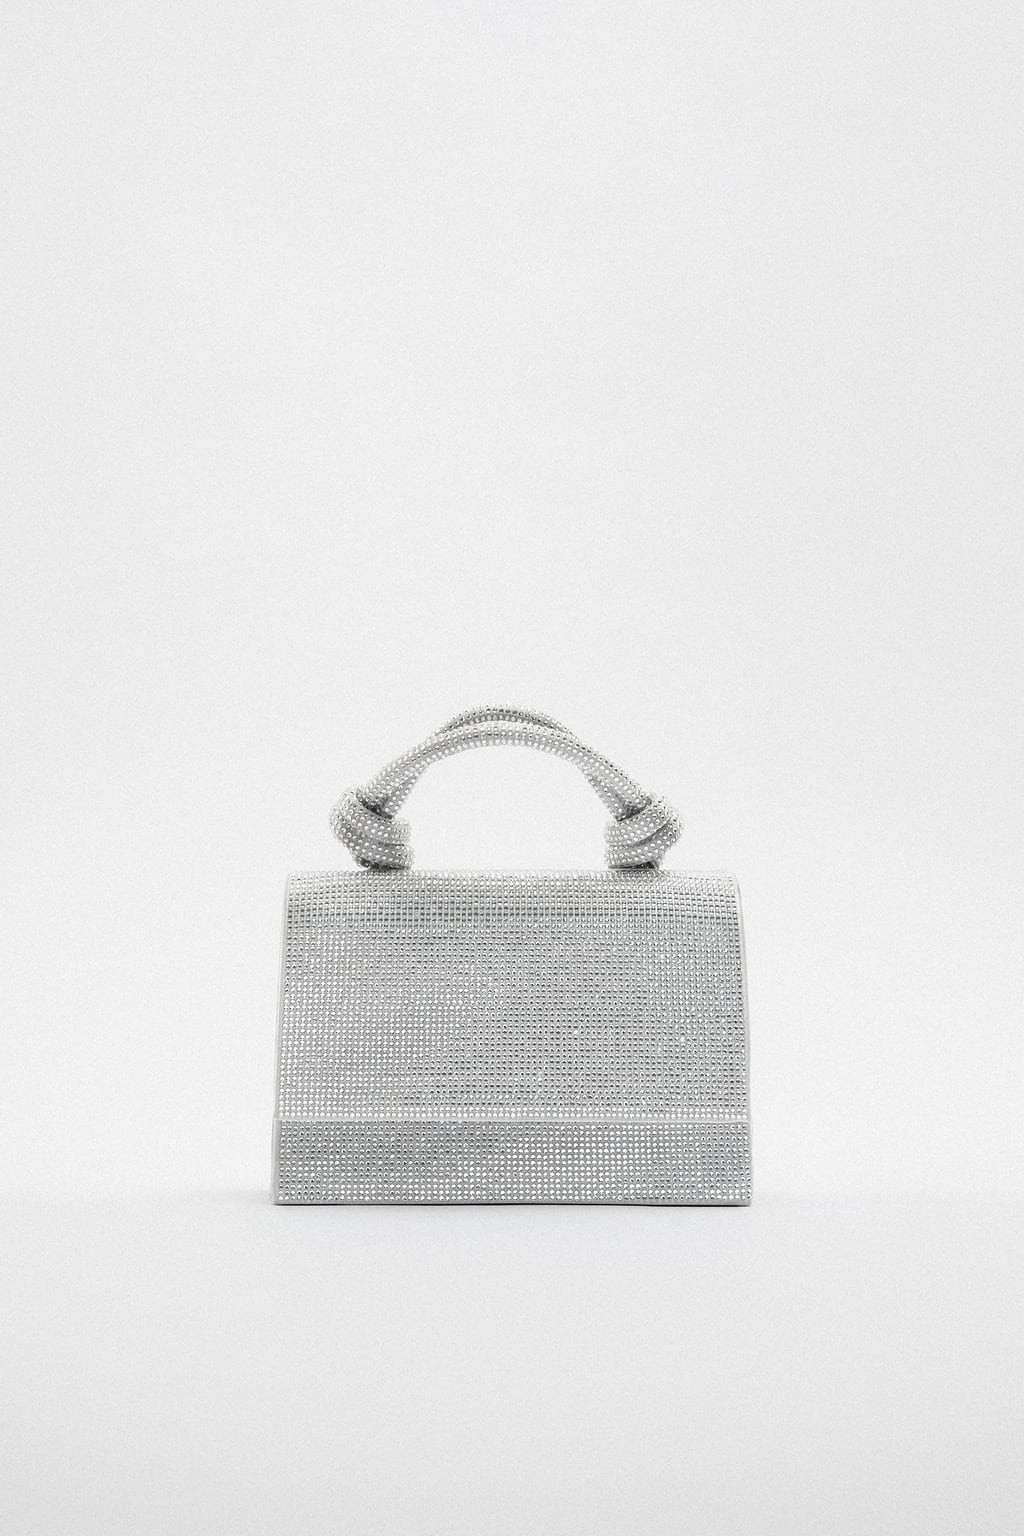 Zara Sparkly Mini City Bag